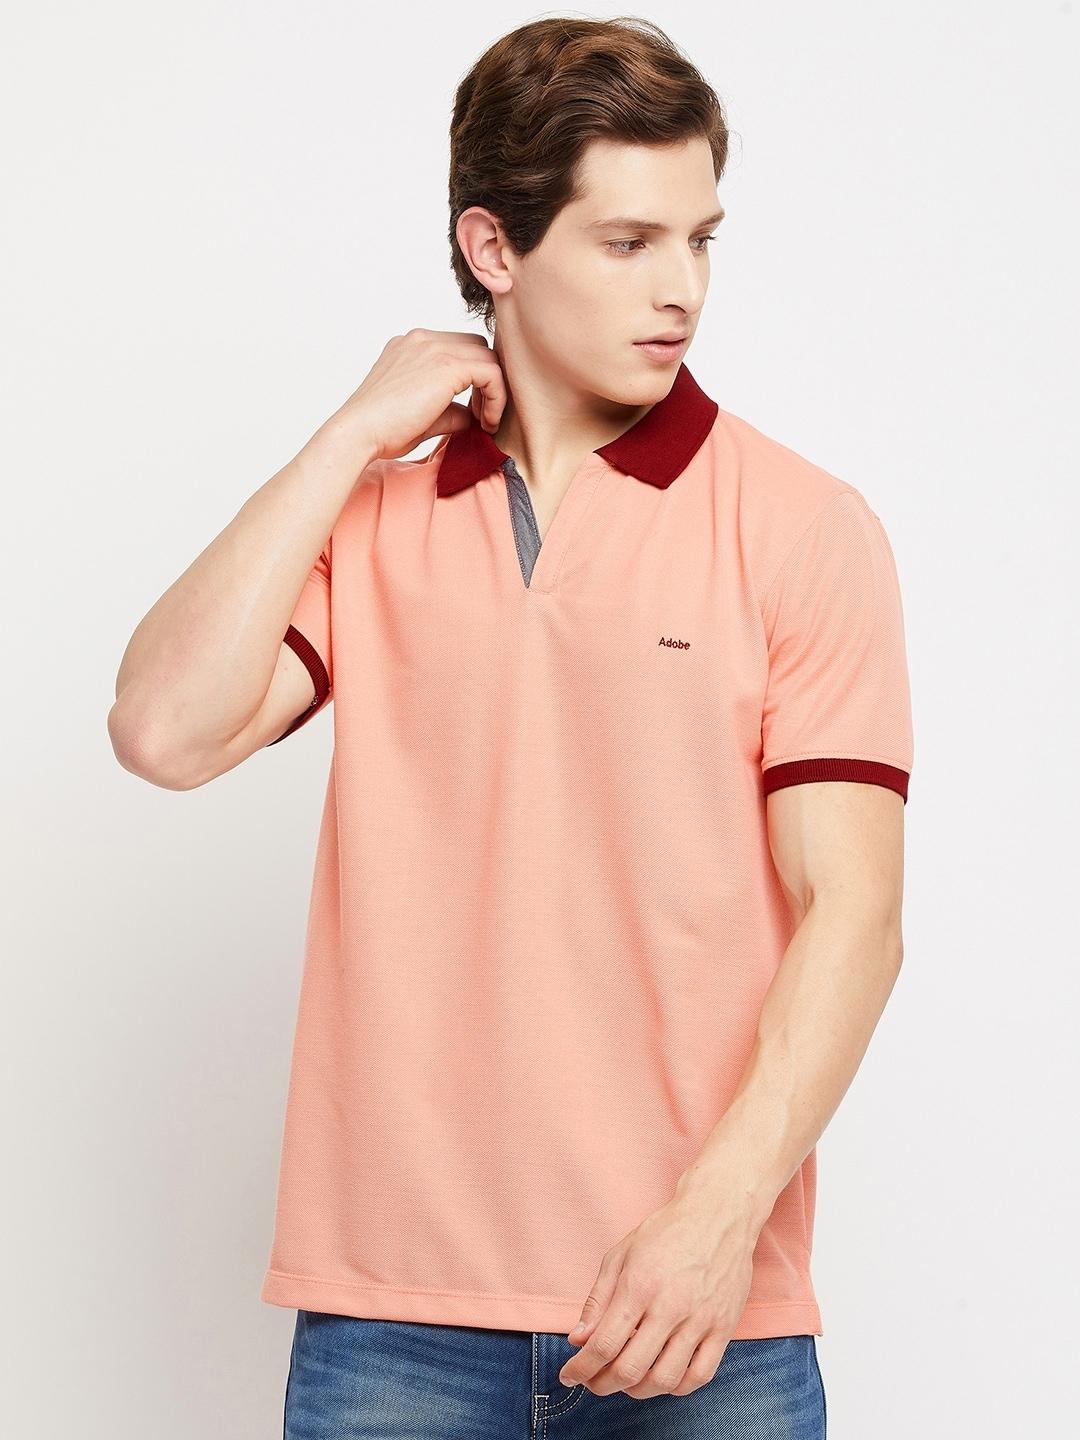 adobe-men-peach-coloured-polo-collar-t-shirt